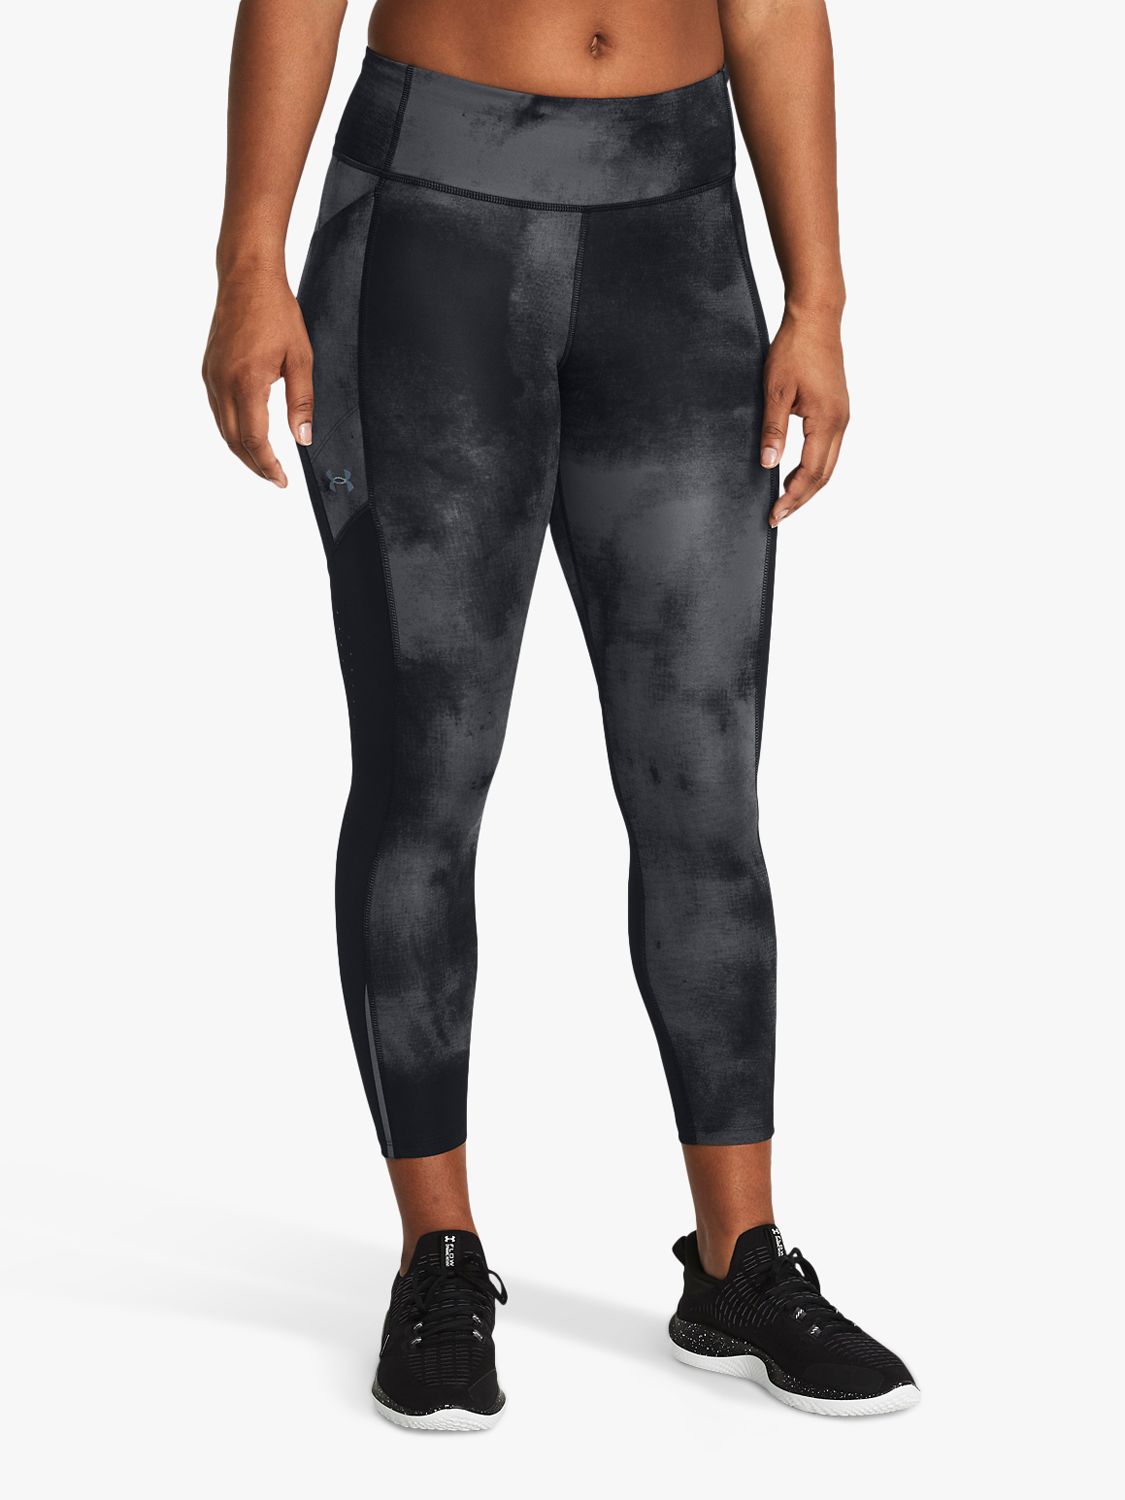 Under Armour Super Light HeatGear® Printed Gym Leggings, Black/Reflective, XS